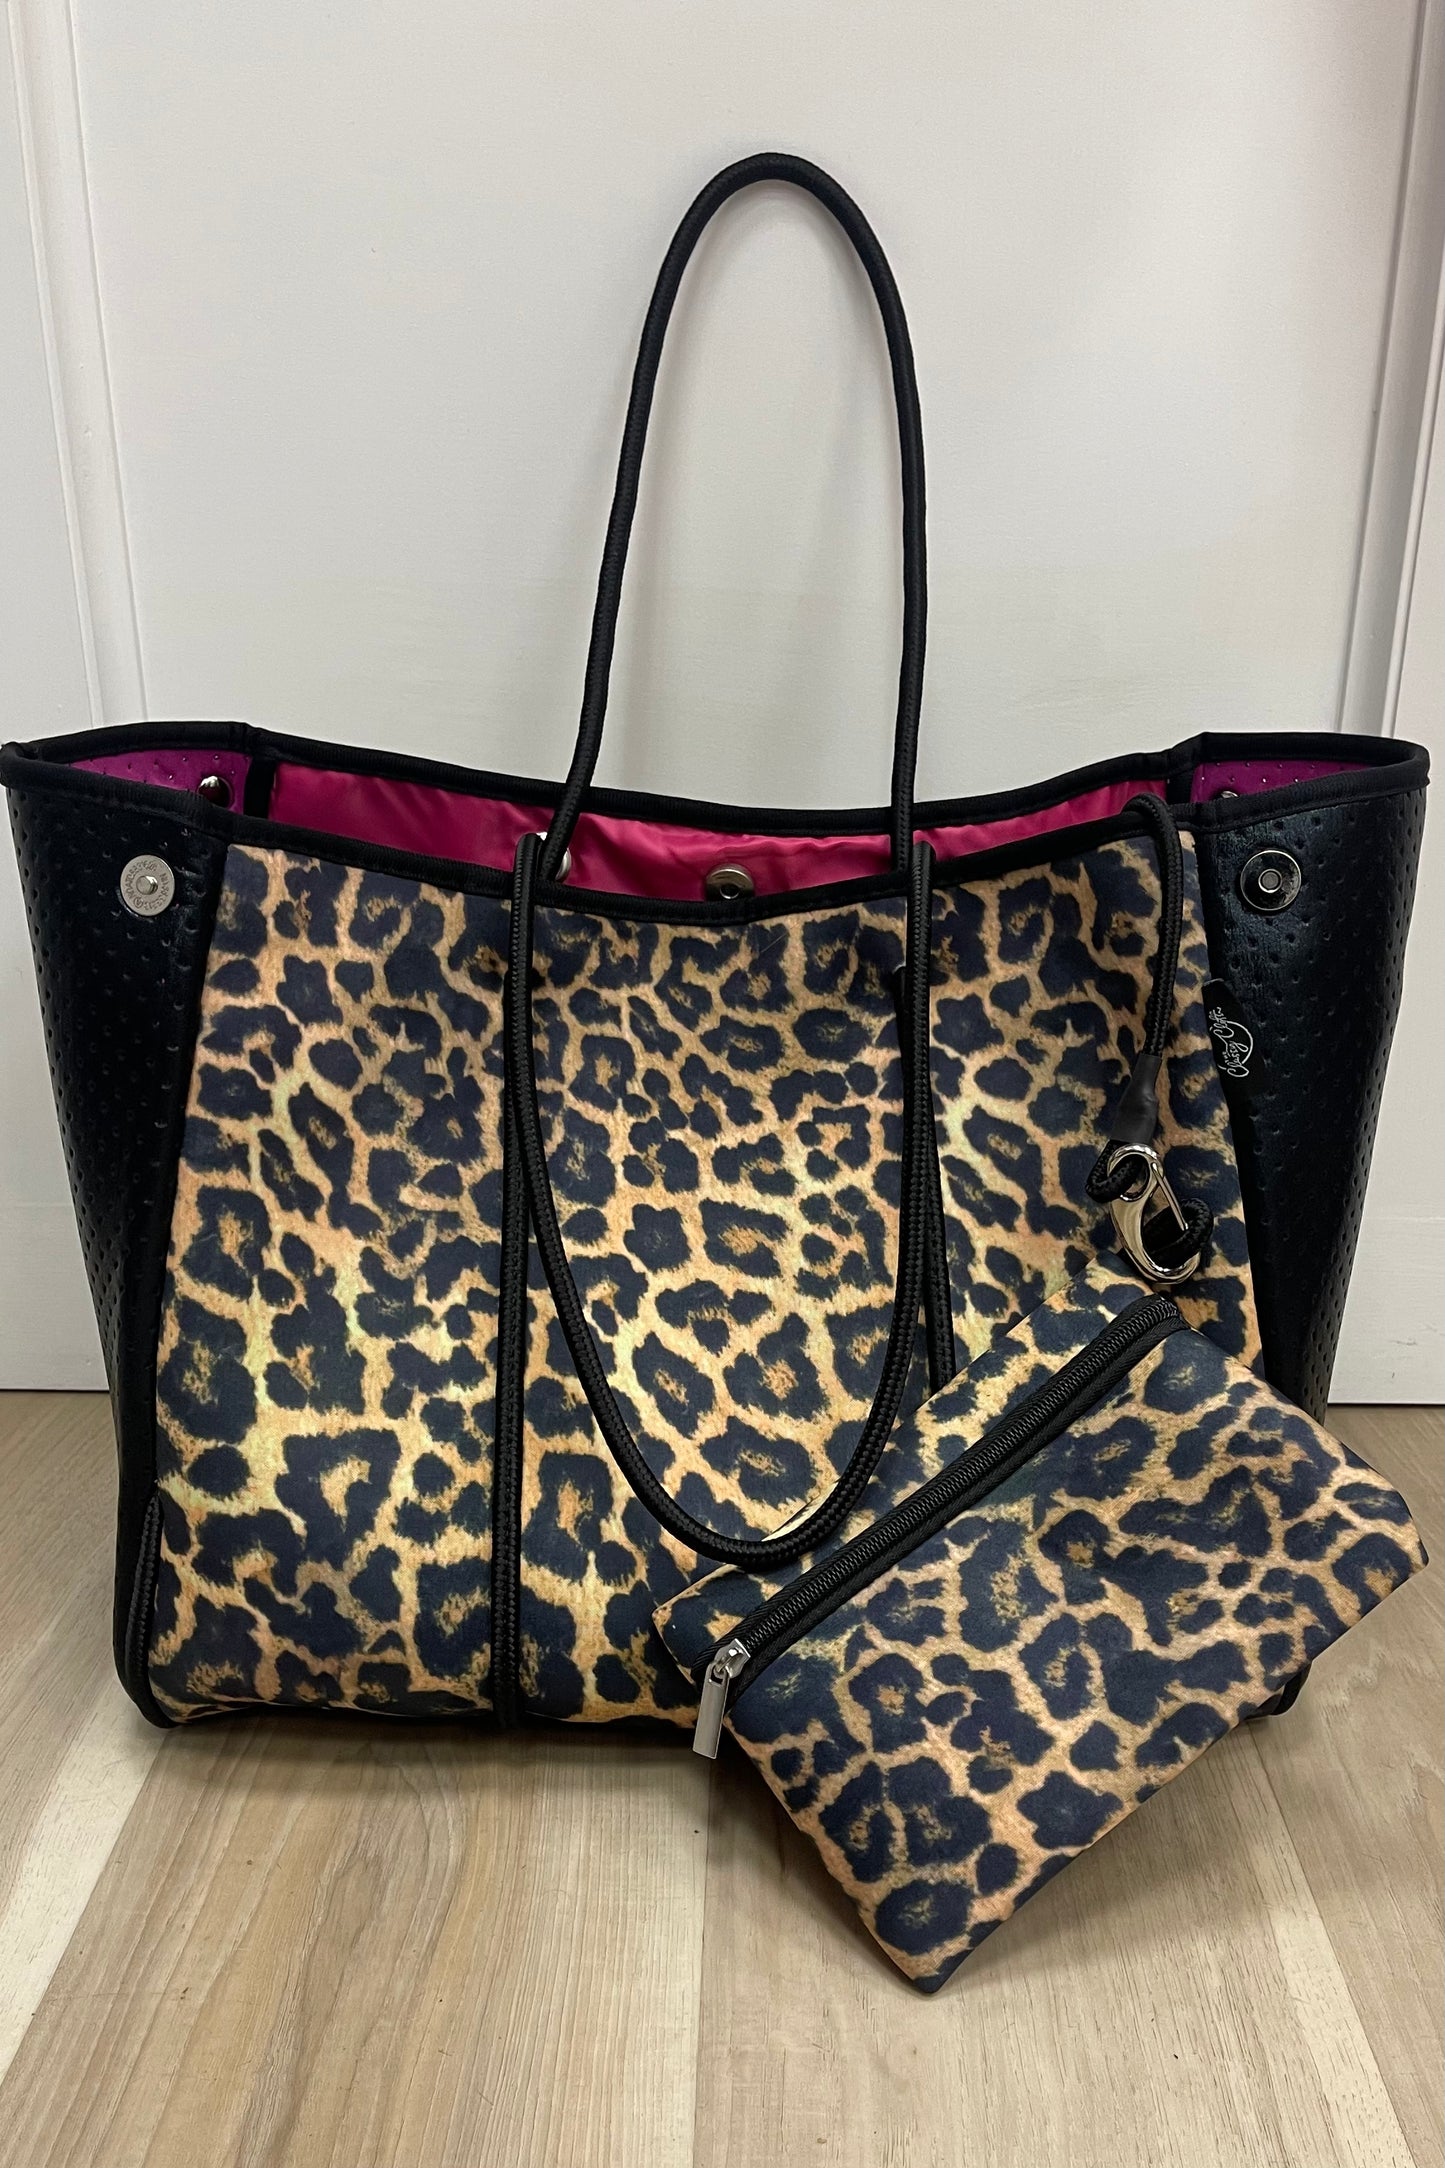 neoprene tote cheetah + black leather w/ hot pink inside lining